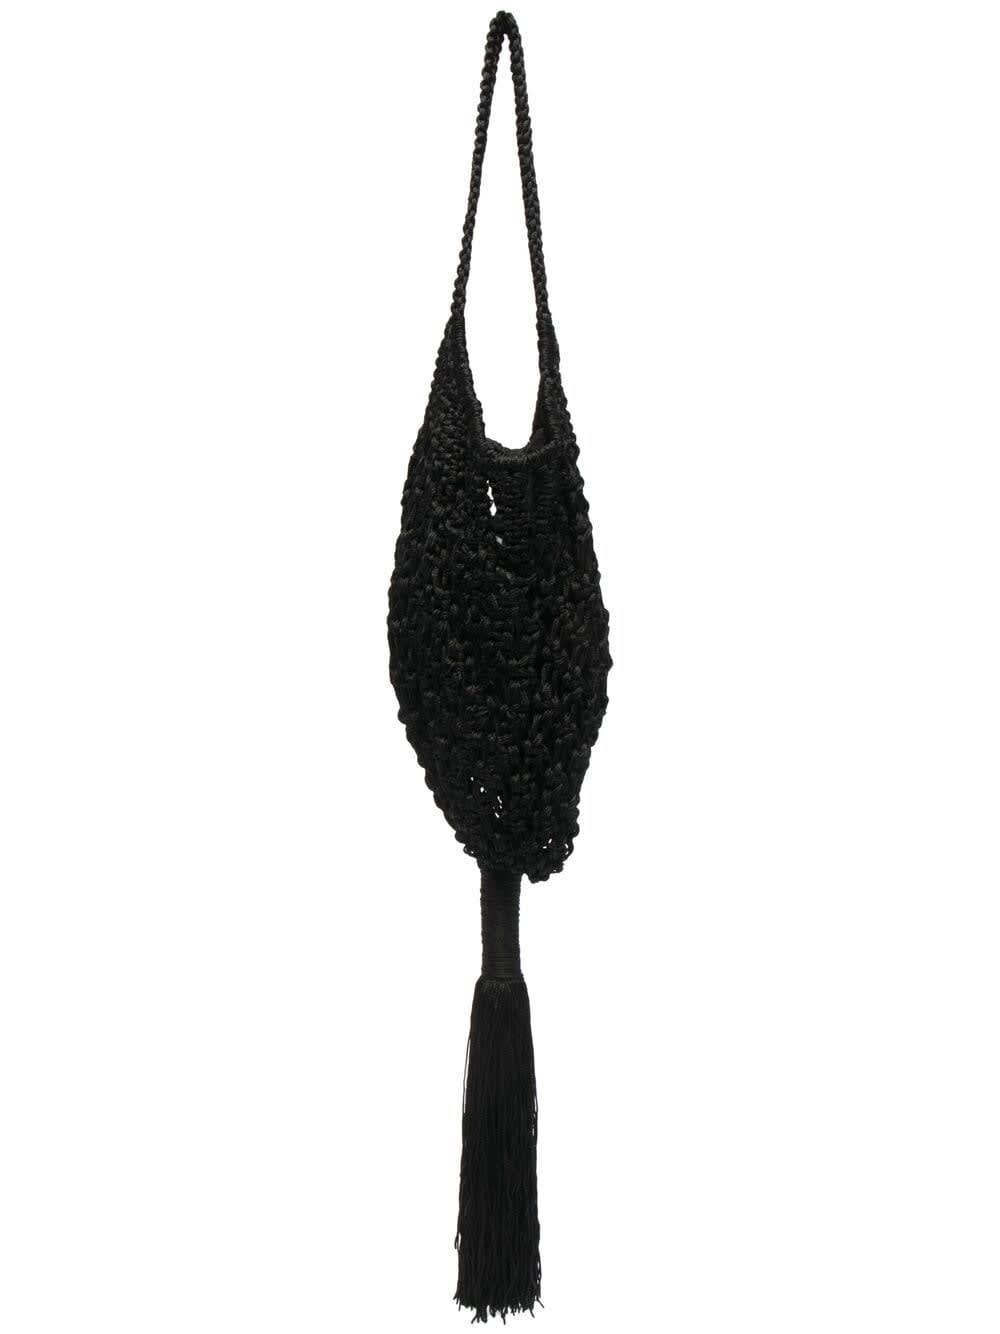 Parosh Black Knitted Handbag With Tassel Detail